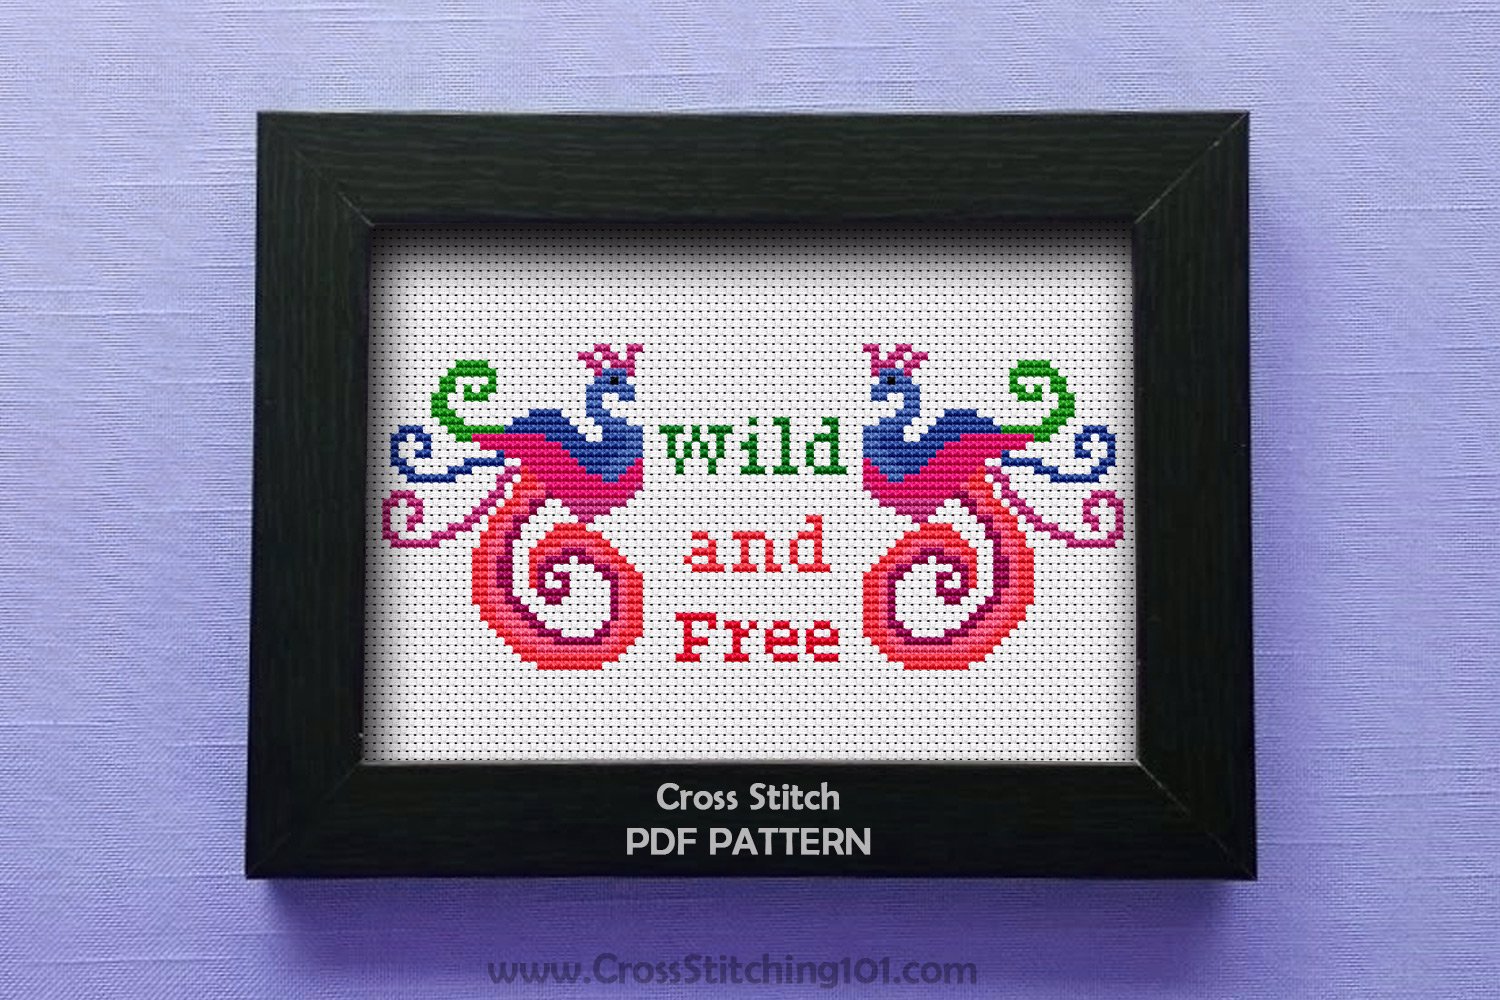 WILD AND FREE -Peacock Swirl Designs Cross Stitch Design